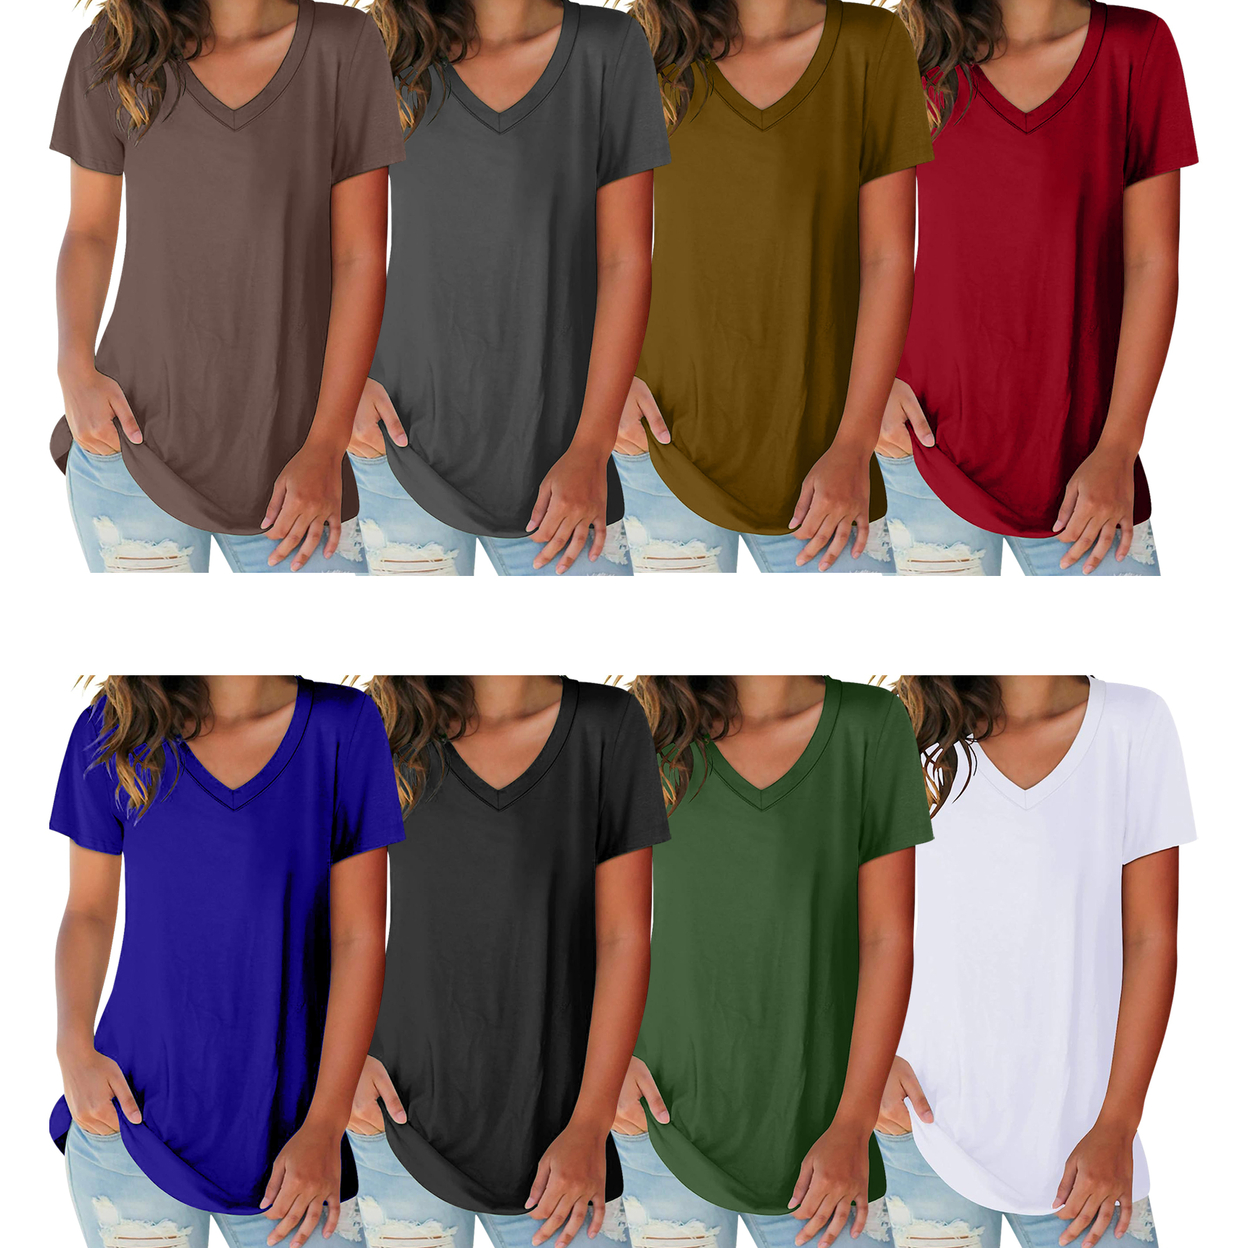 2-Pack: Women's Ultra Soft Smooth Cotton Blend Basic V-Neck Short Sleeve Shirts - Black & Navy, Small